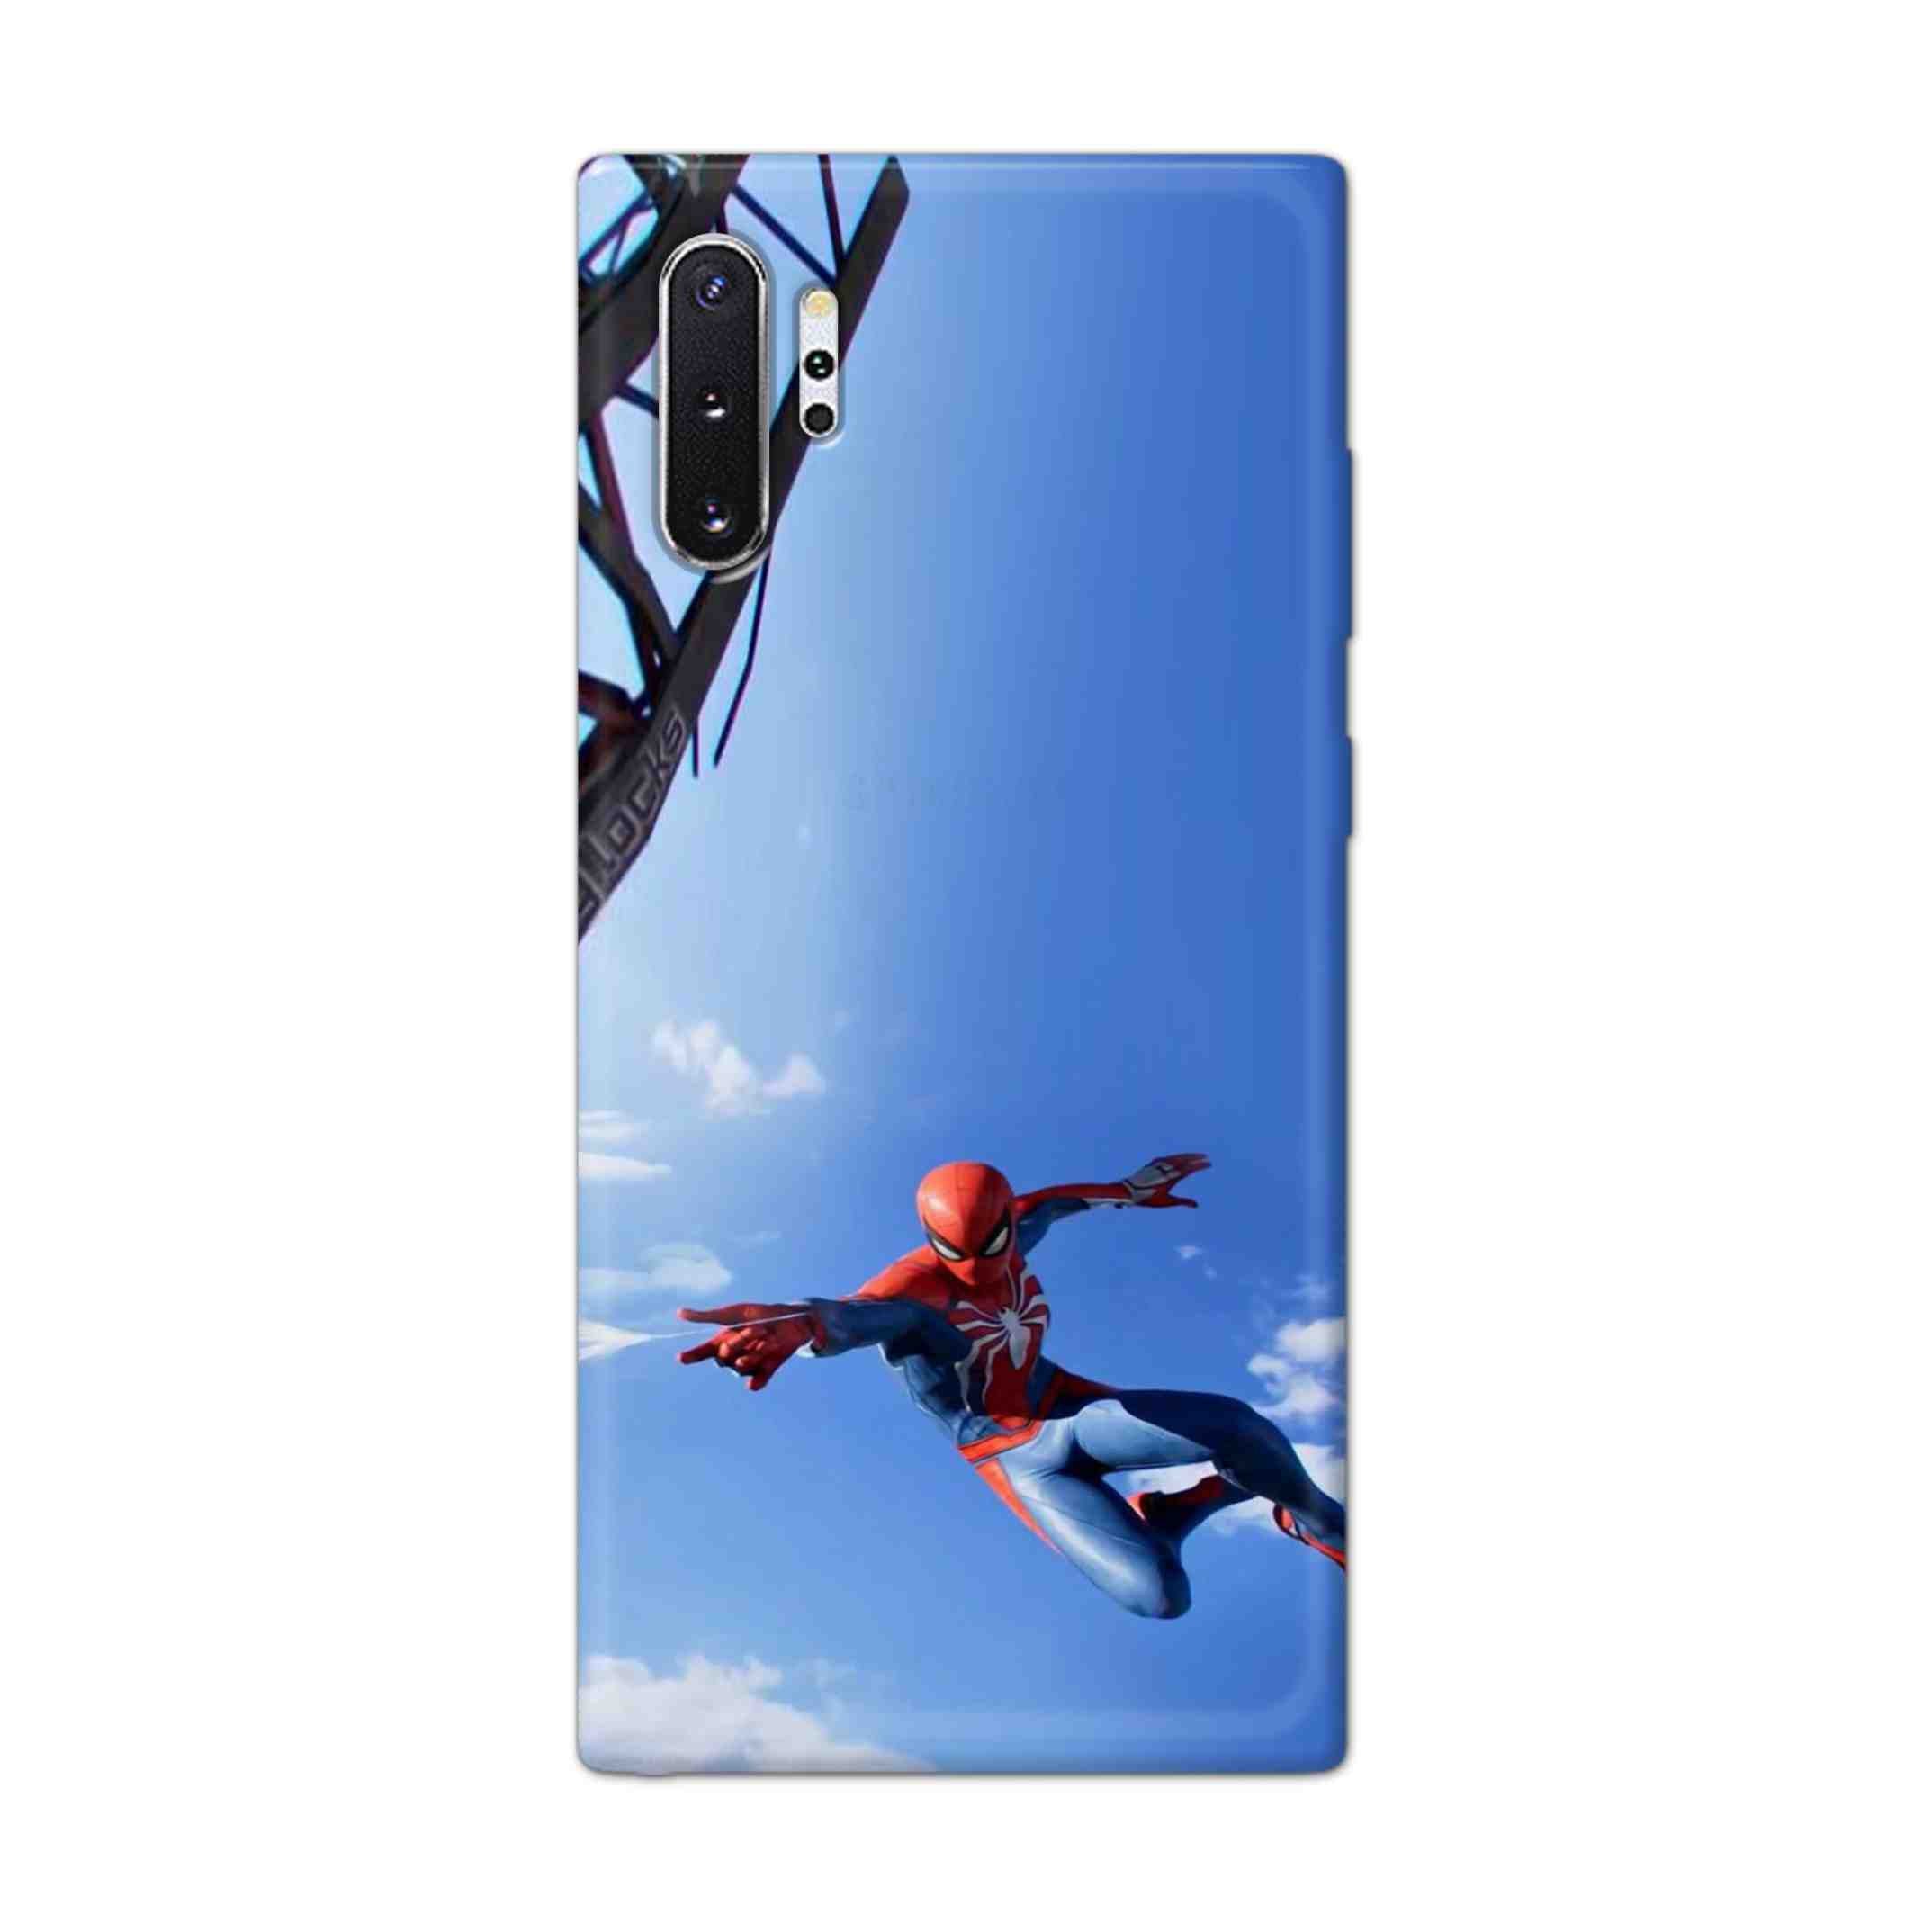 Buy Marvel Studio Spiderman Hard Back Mobile Phone Case Cover For Samsung Note 10 Plus (5G) Online